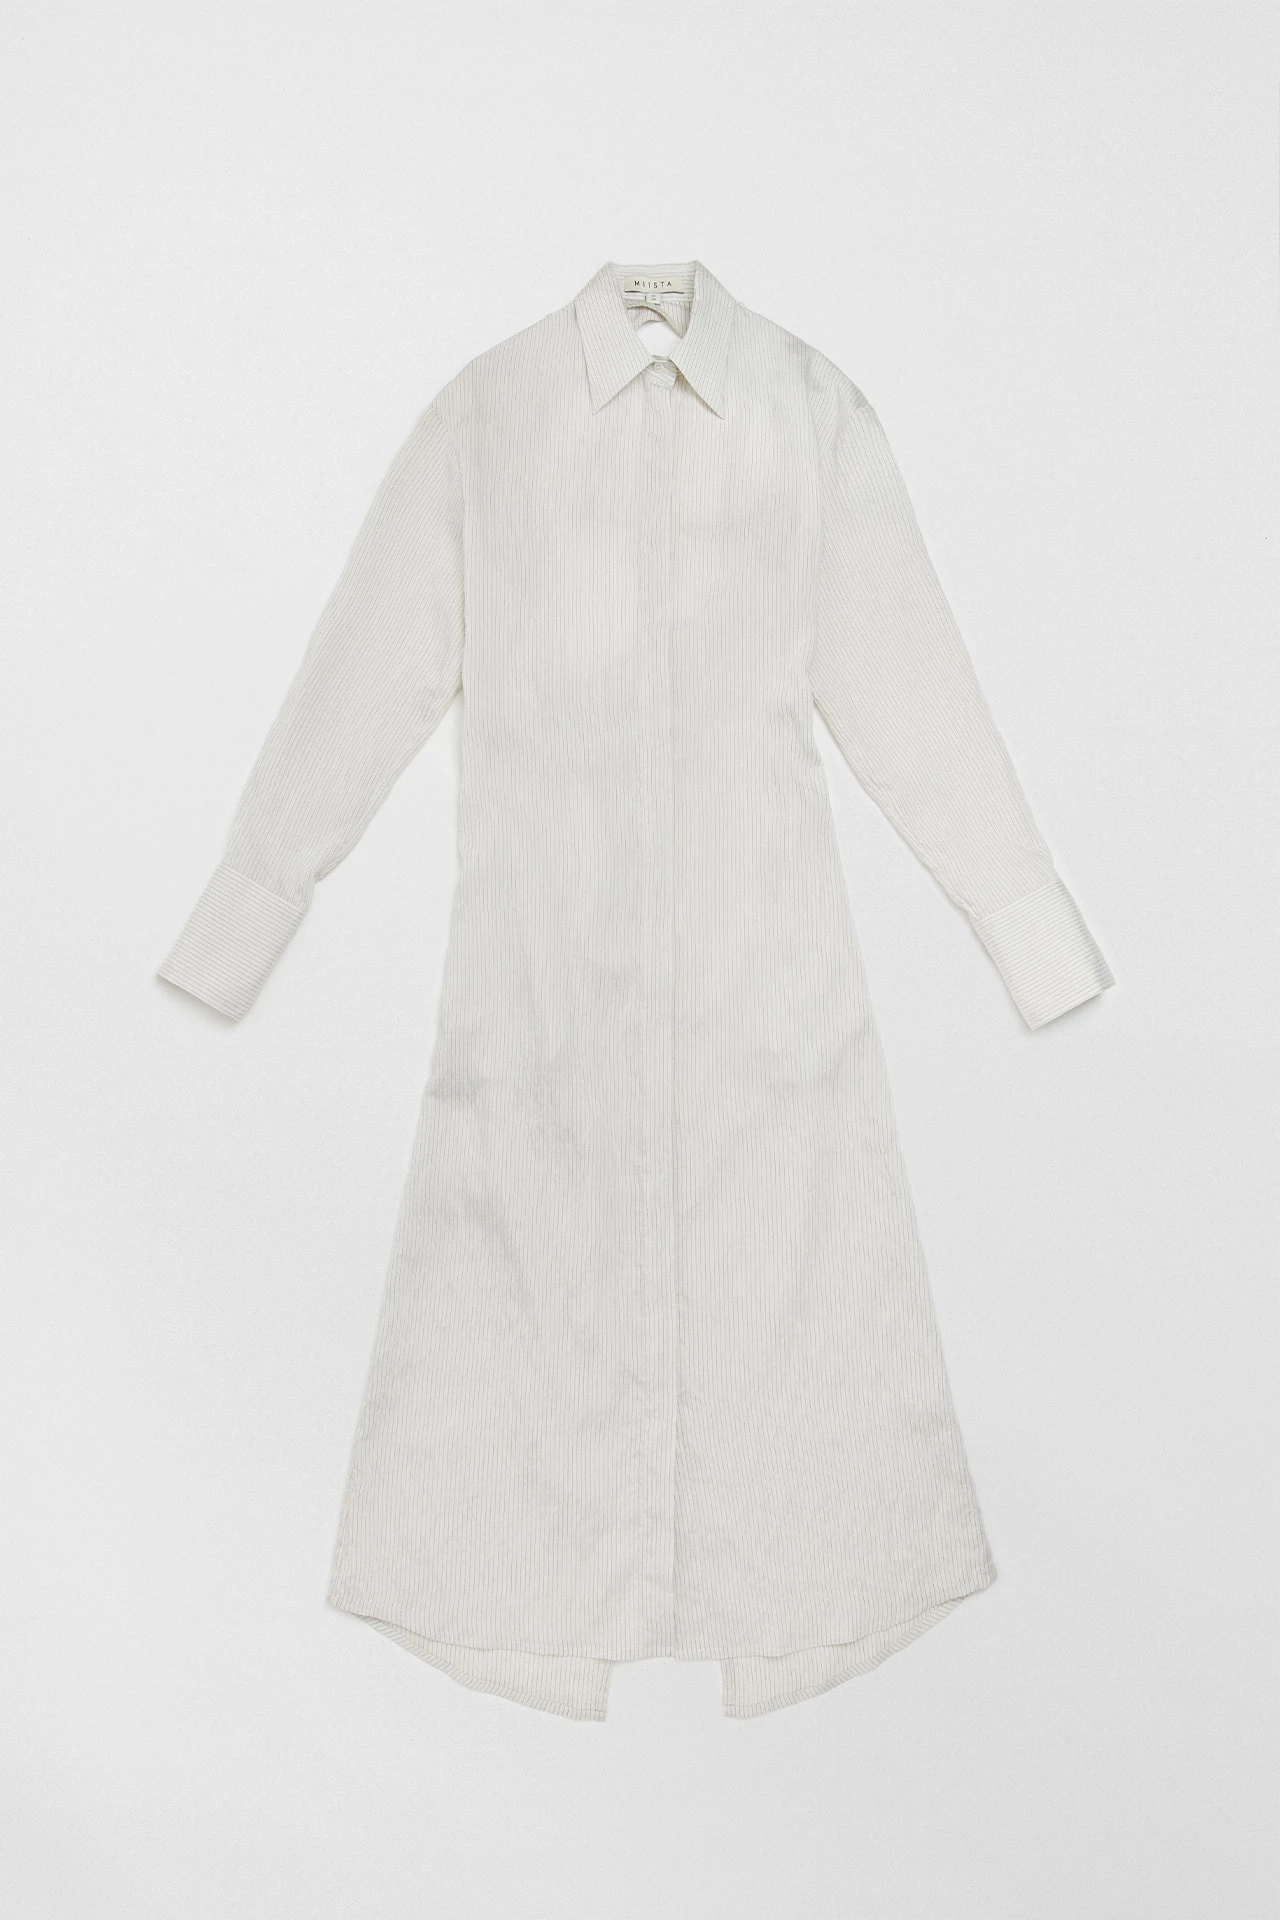 Miista-emilie-white-narow-line-dress-01